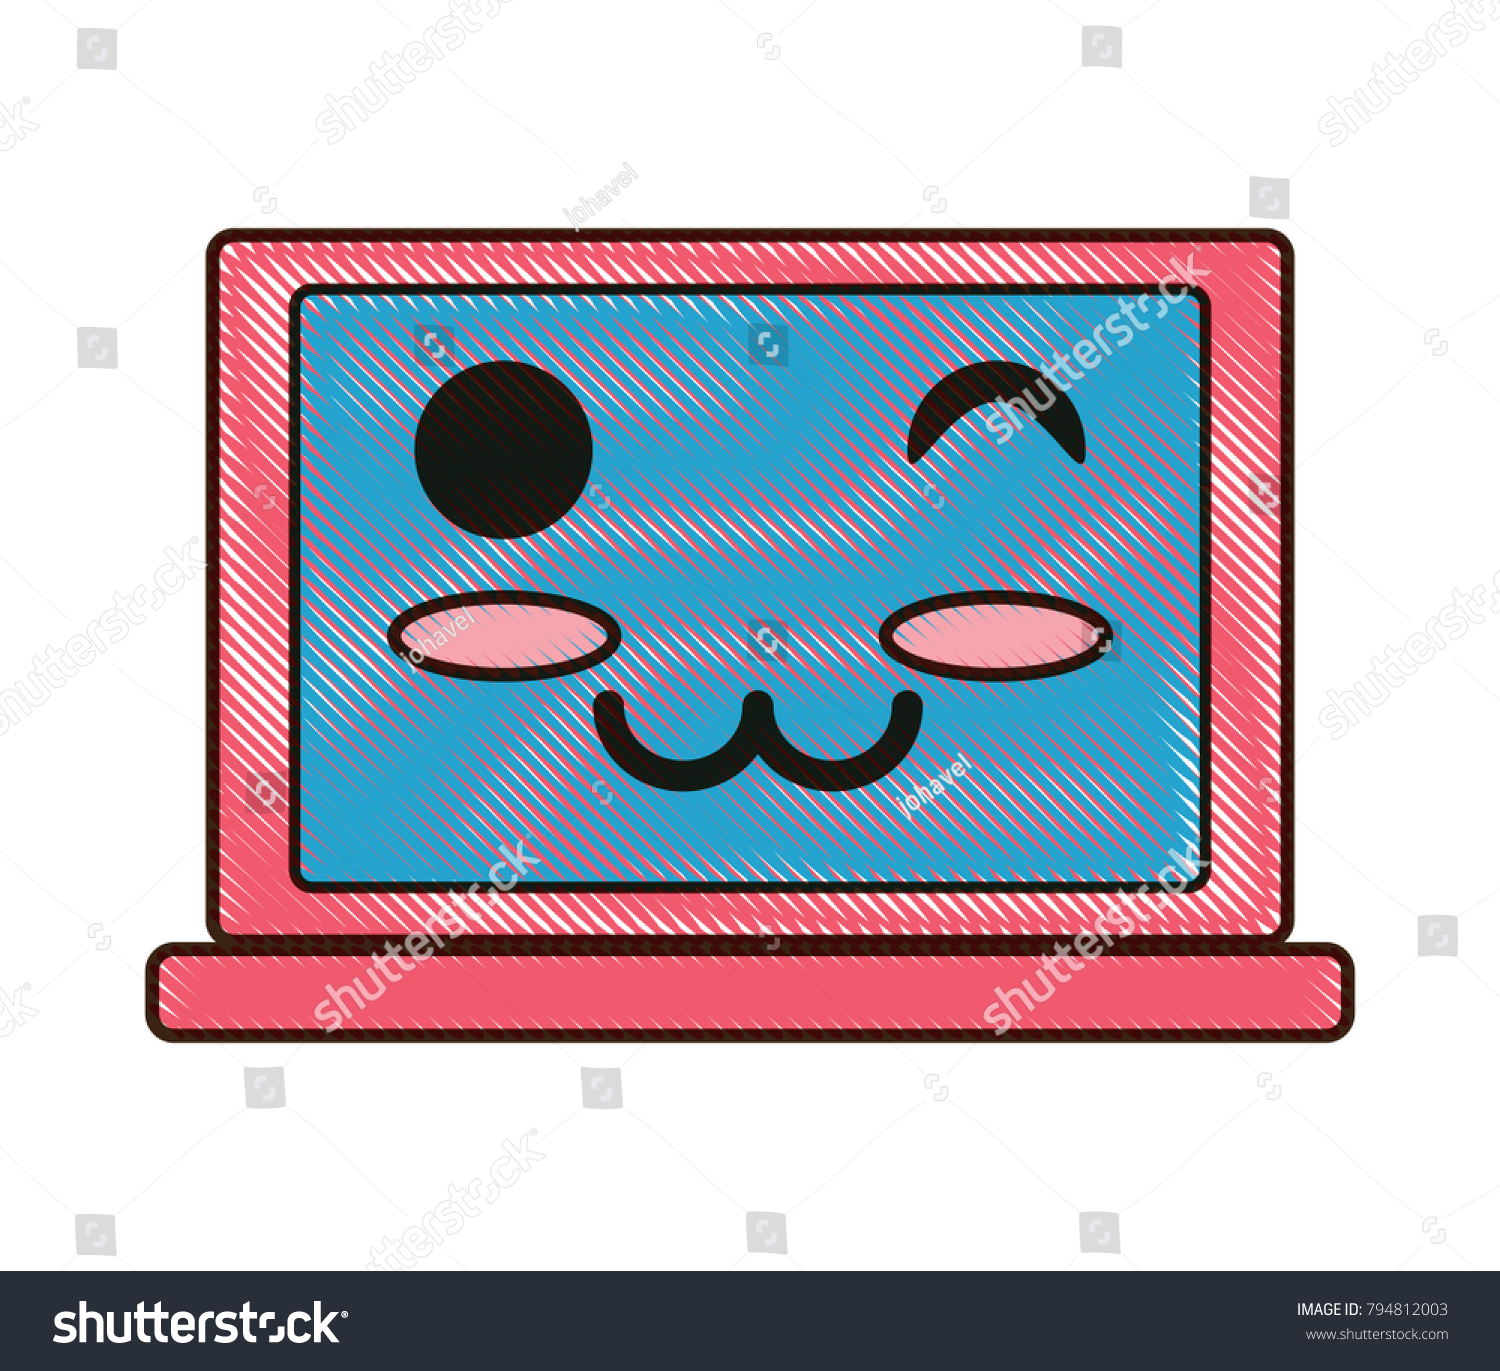 Kawaii Laptop Computer Icon Stock Vector (Royalty Free) 794812003 ...